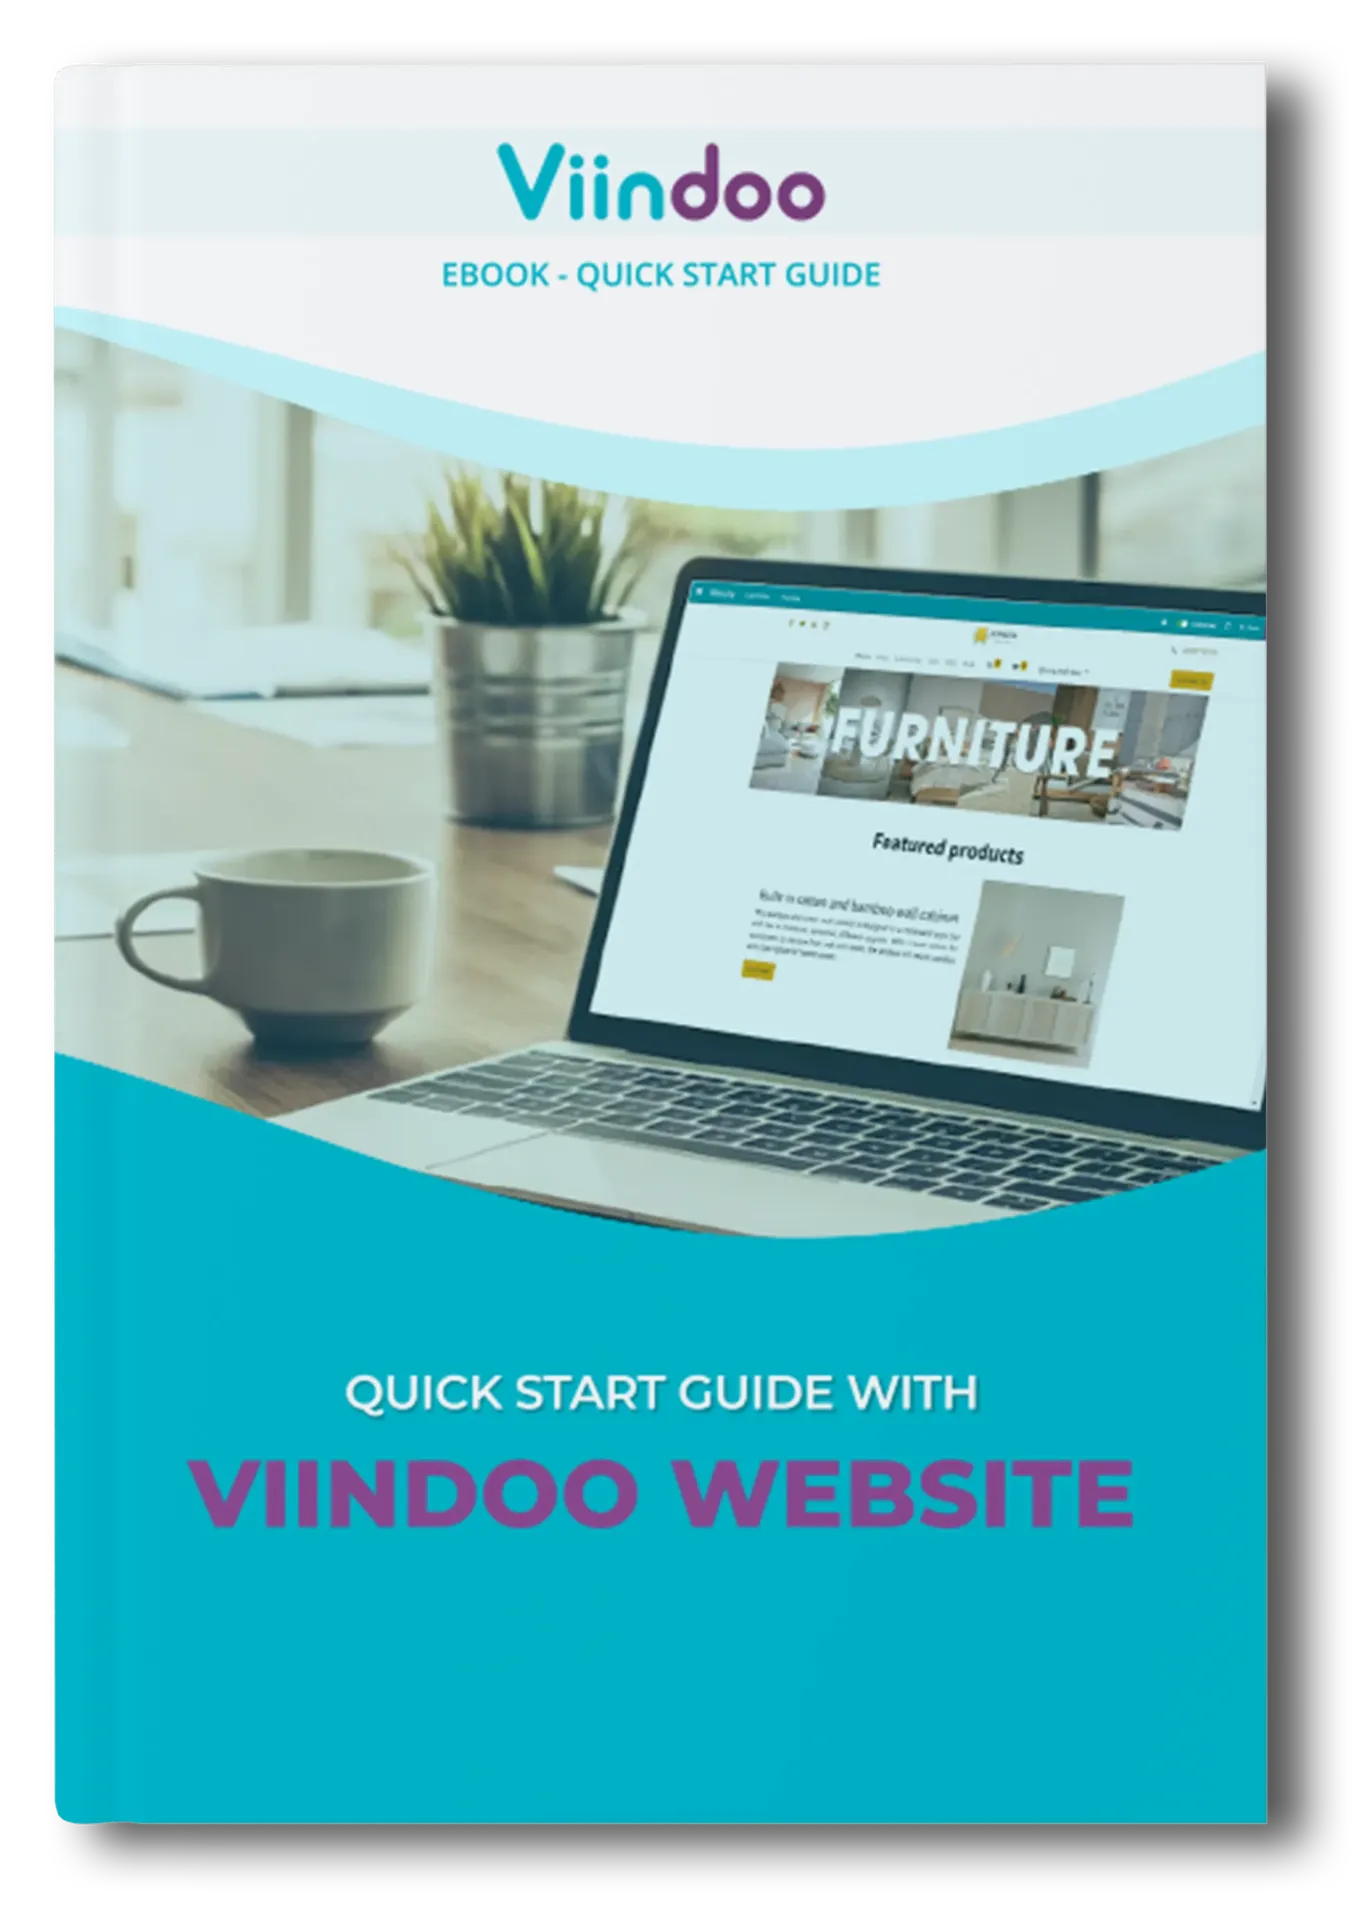 Quick Start Guide with Viindoo Website